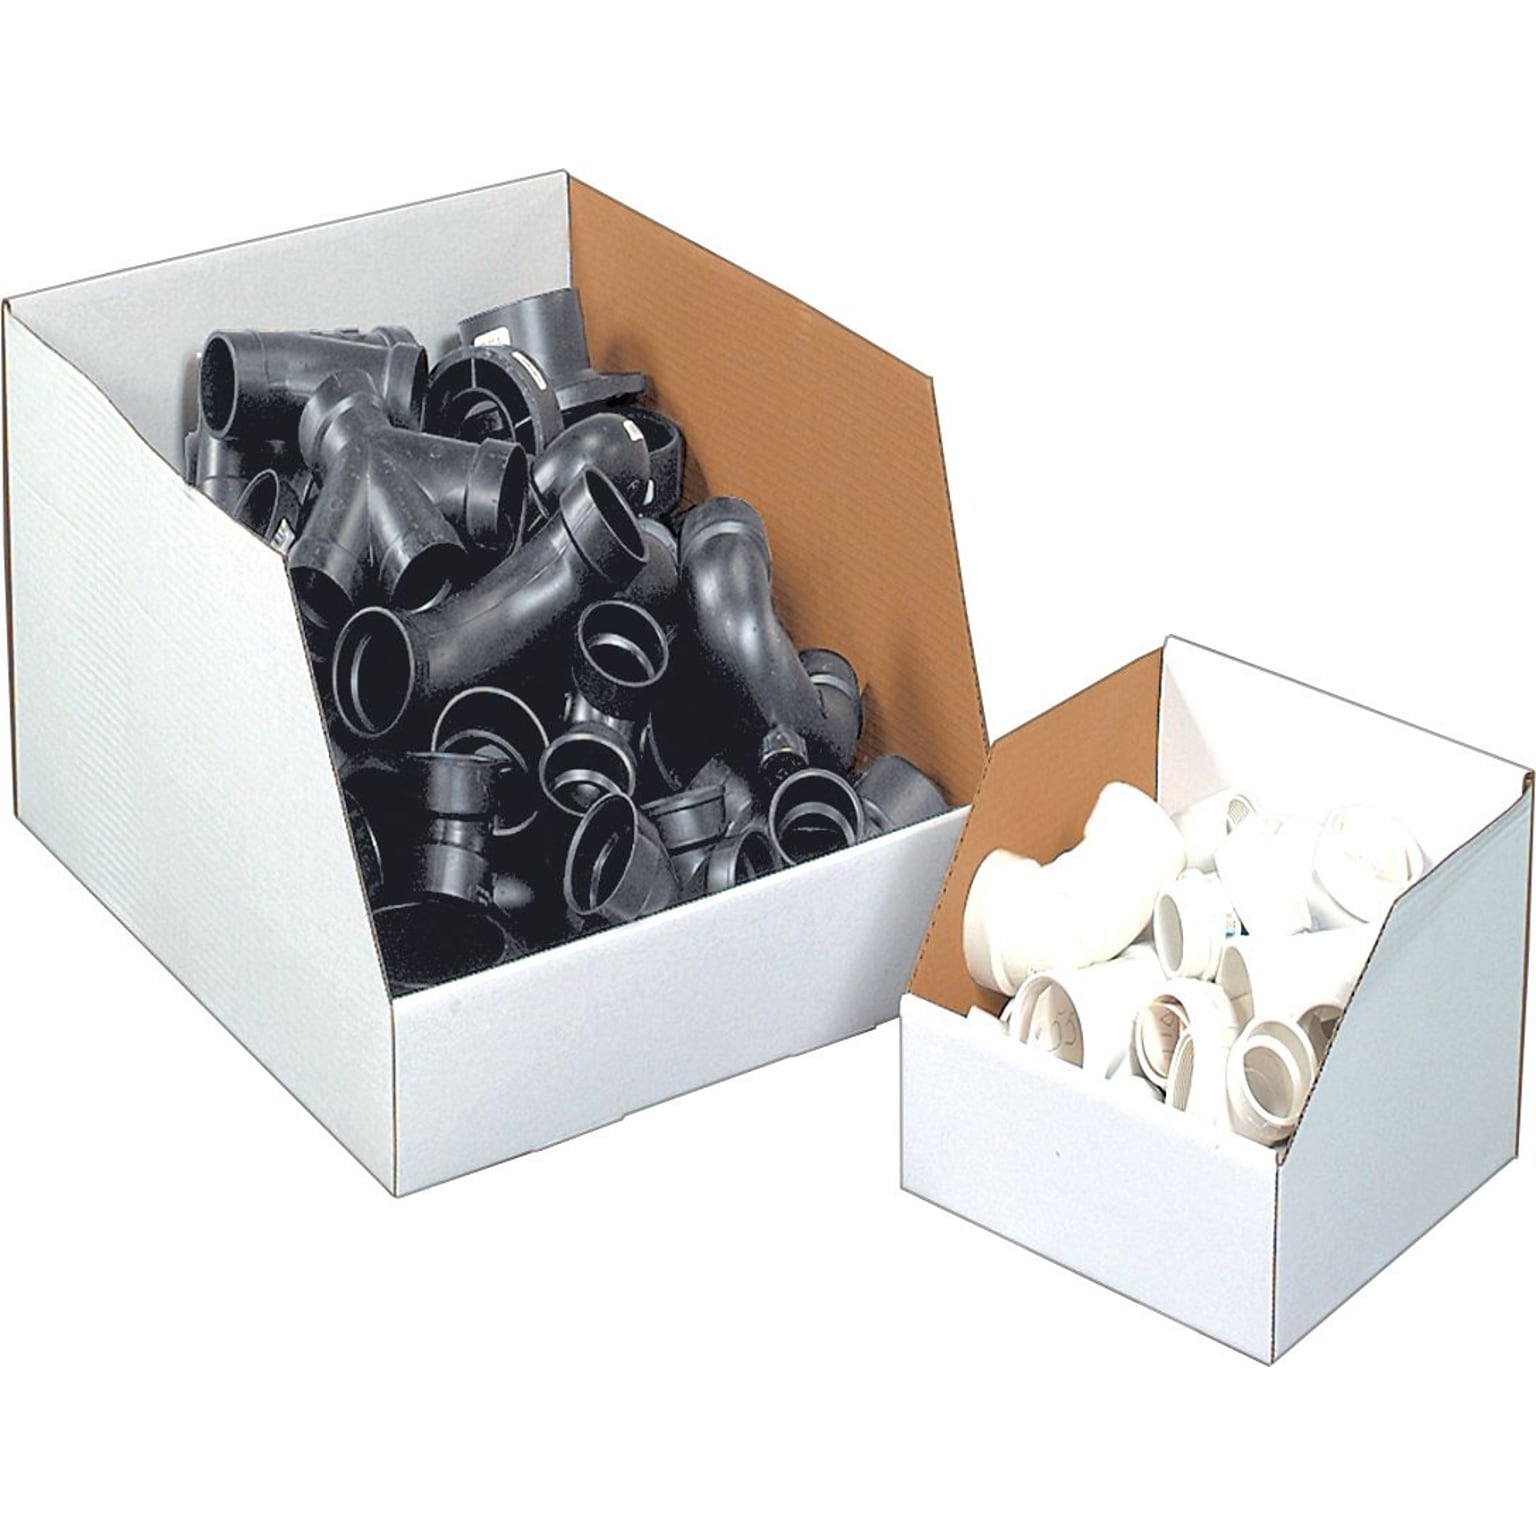 Jumbo Open Top Bin Boxes, 8 x 18 x 10, White, 25/Bundle